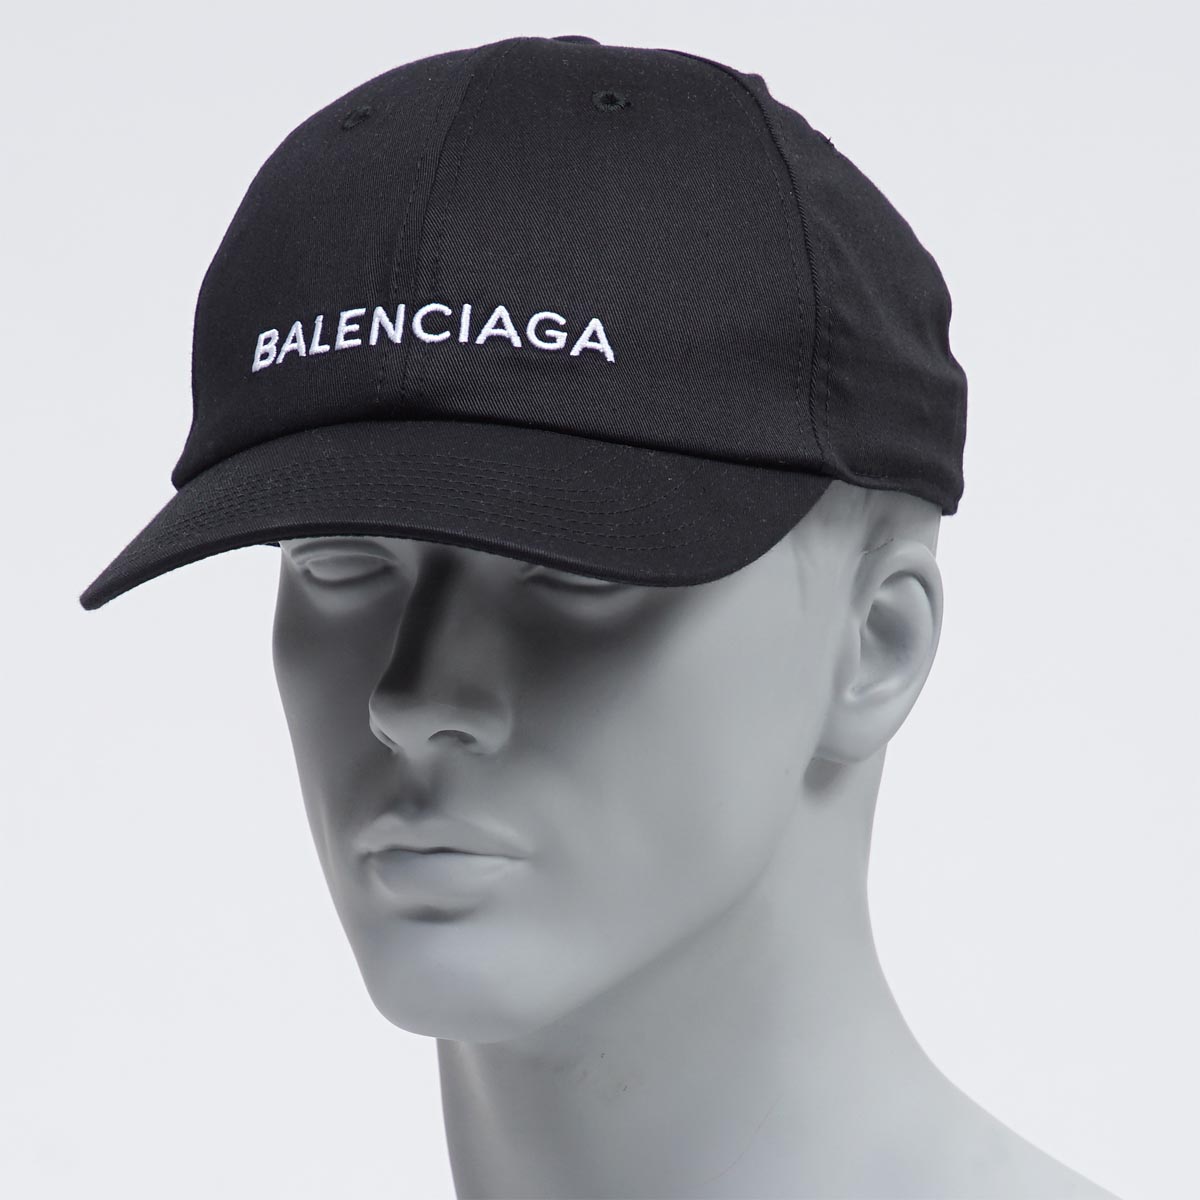 Balenciaga Cap Baseball Black Hat System 452245 452B4 1077 Balenciaga Hats For Sale